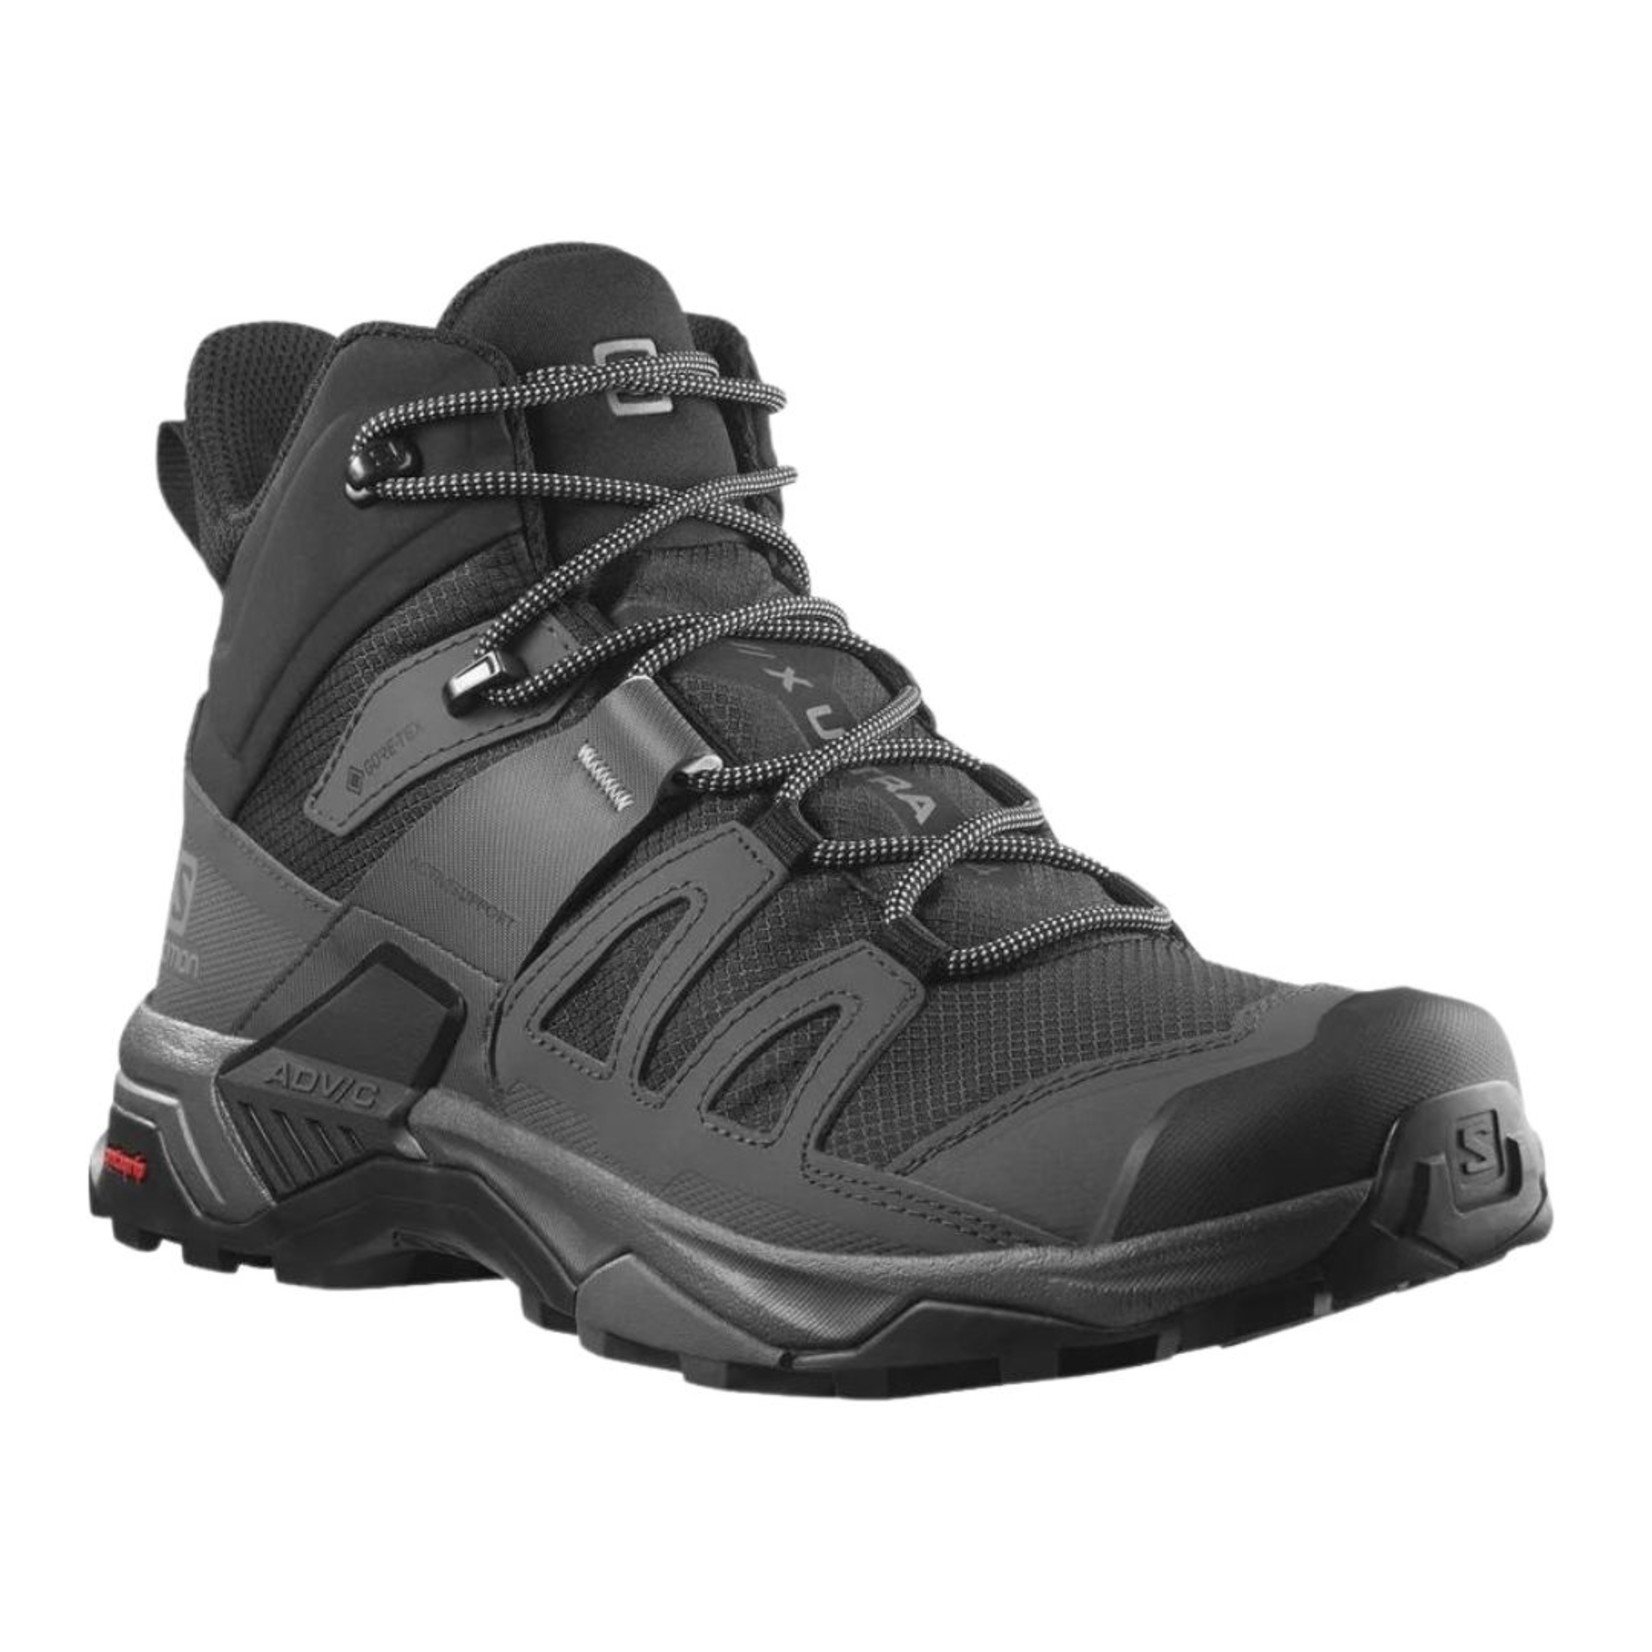 Bot Confront Disagreement Salomon X Ulta 4 Mid GTX Men's Hiking Boots - Shippy Shoes